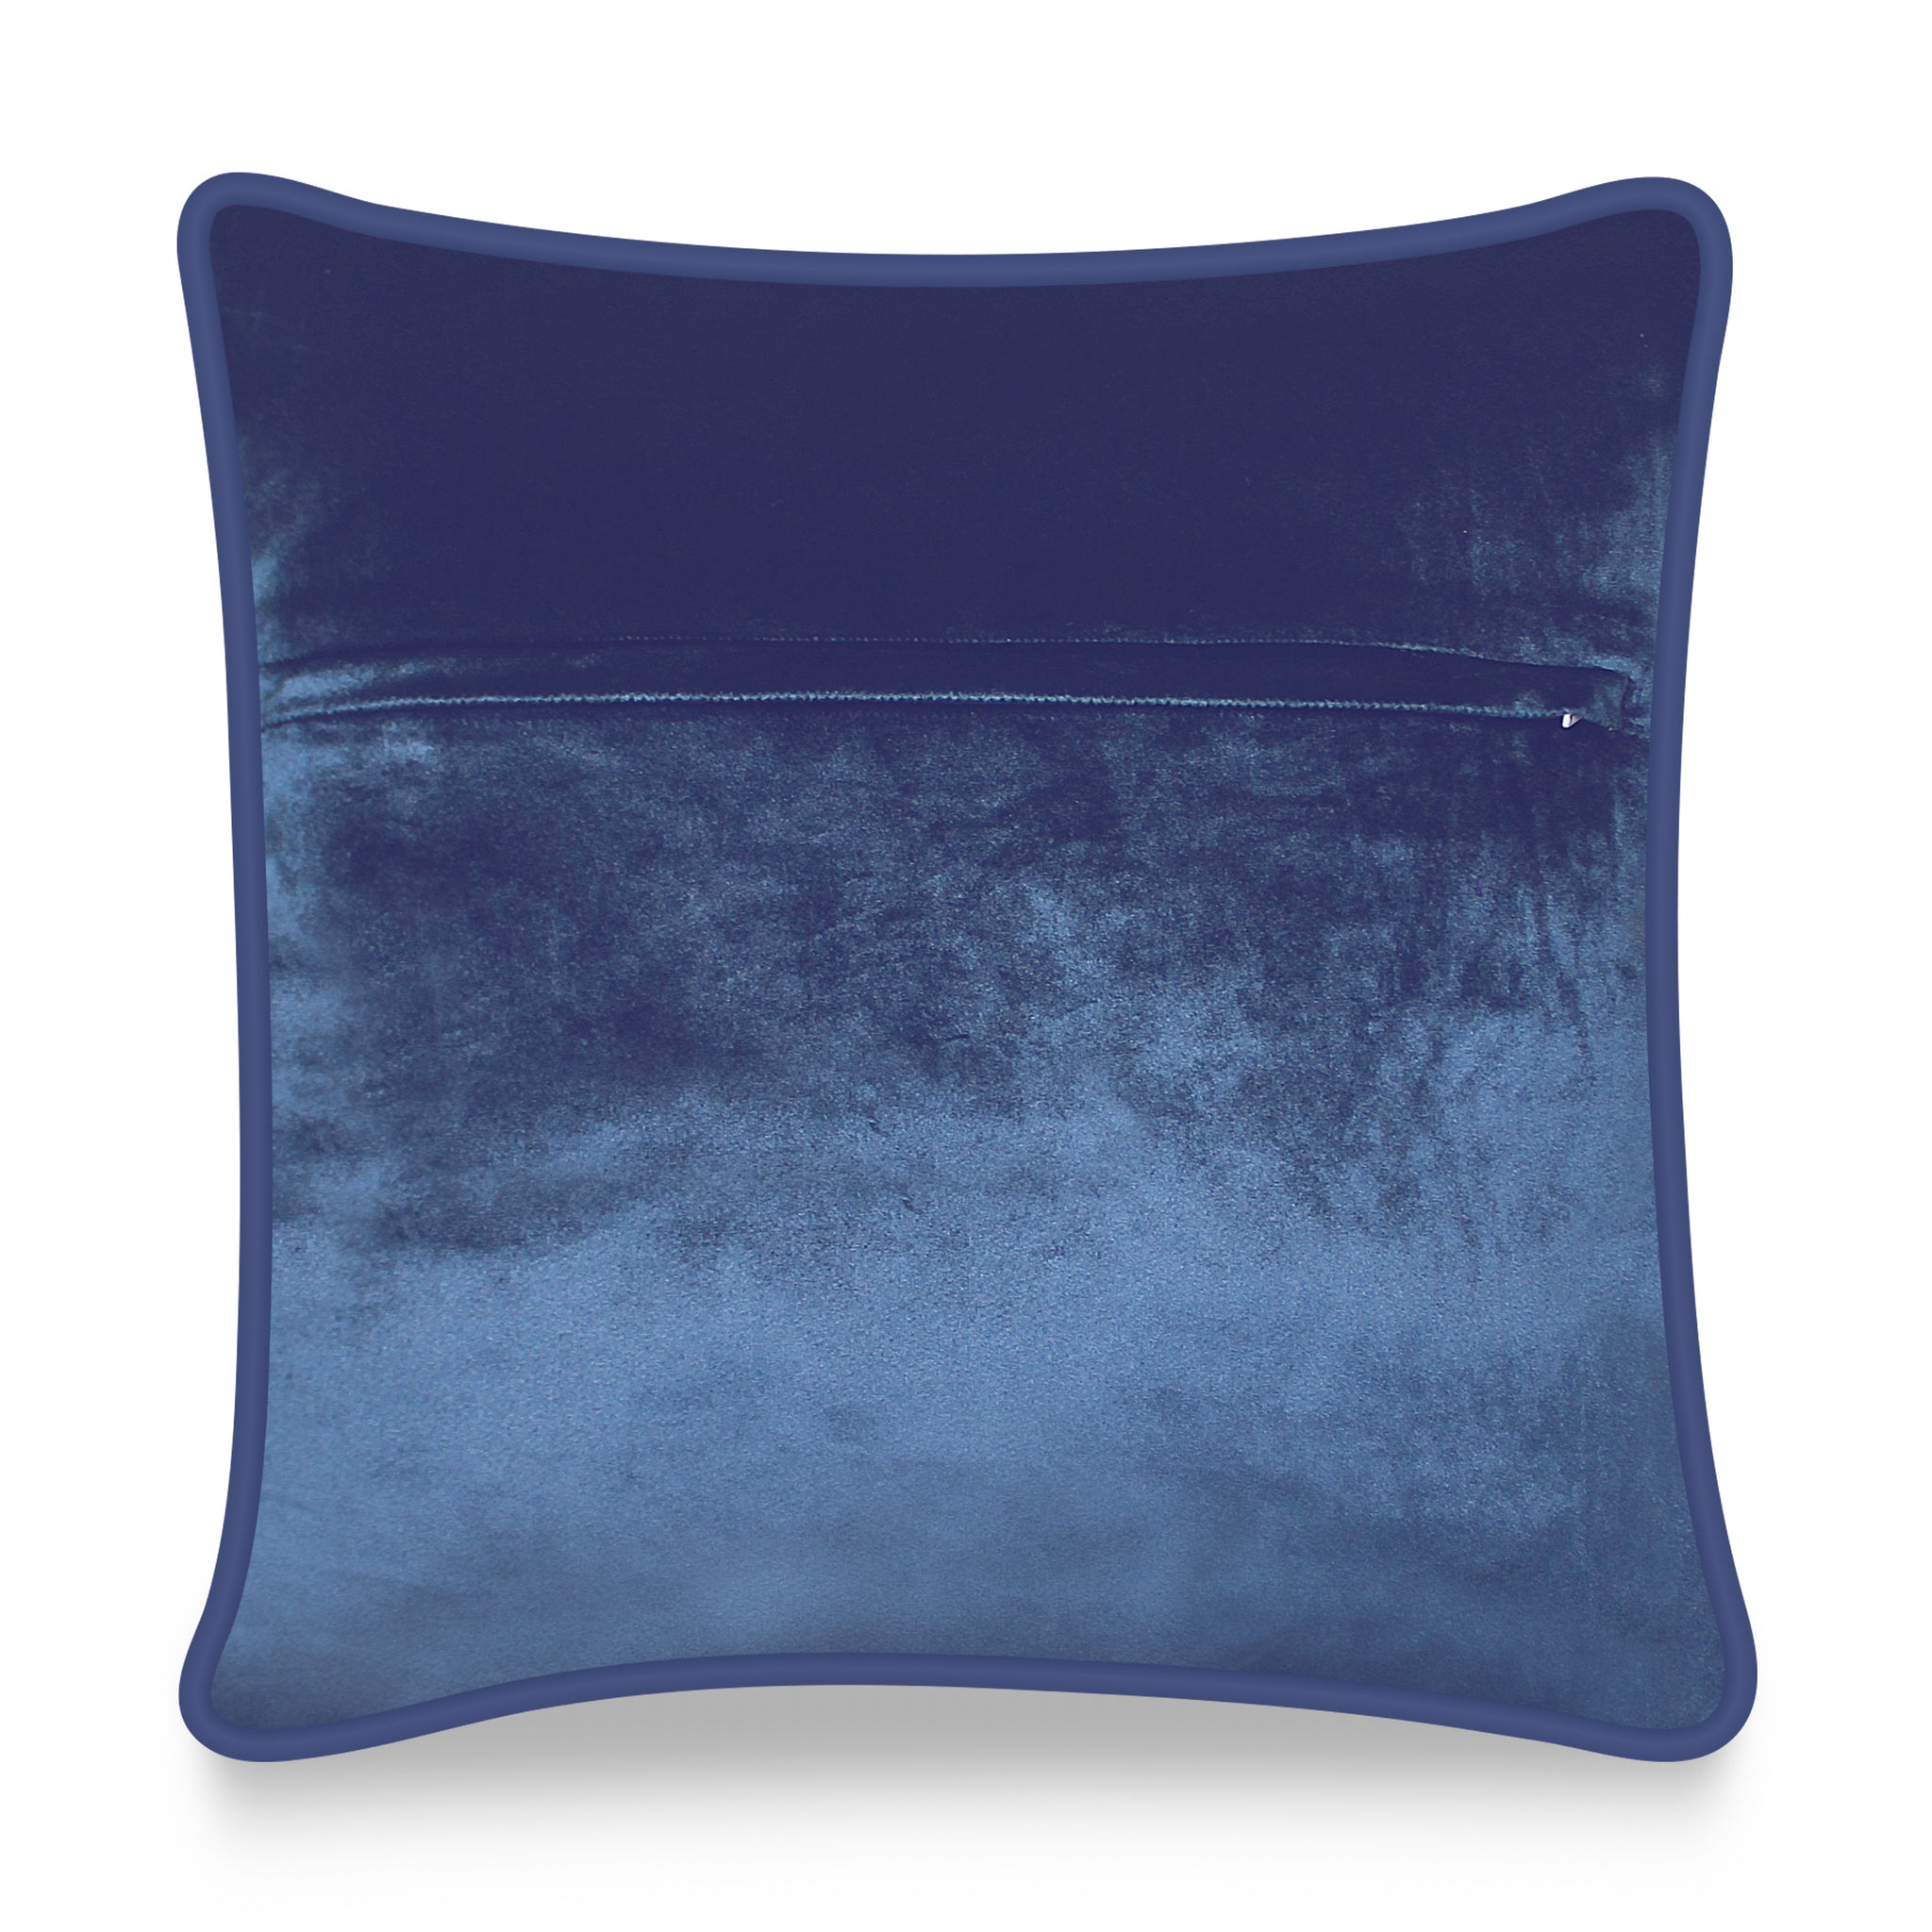  Velvet Cushion Cover Leopard in Jungle Decorative Pillowcase Modern Home Decor Throw Pillow for Sofa Chair 45x45 cm 